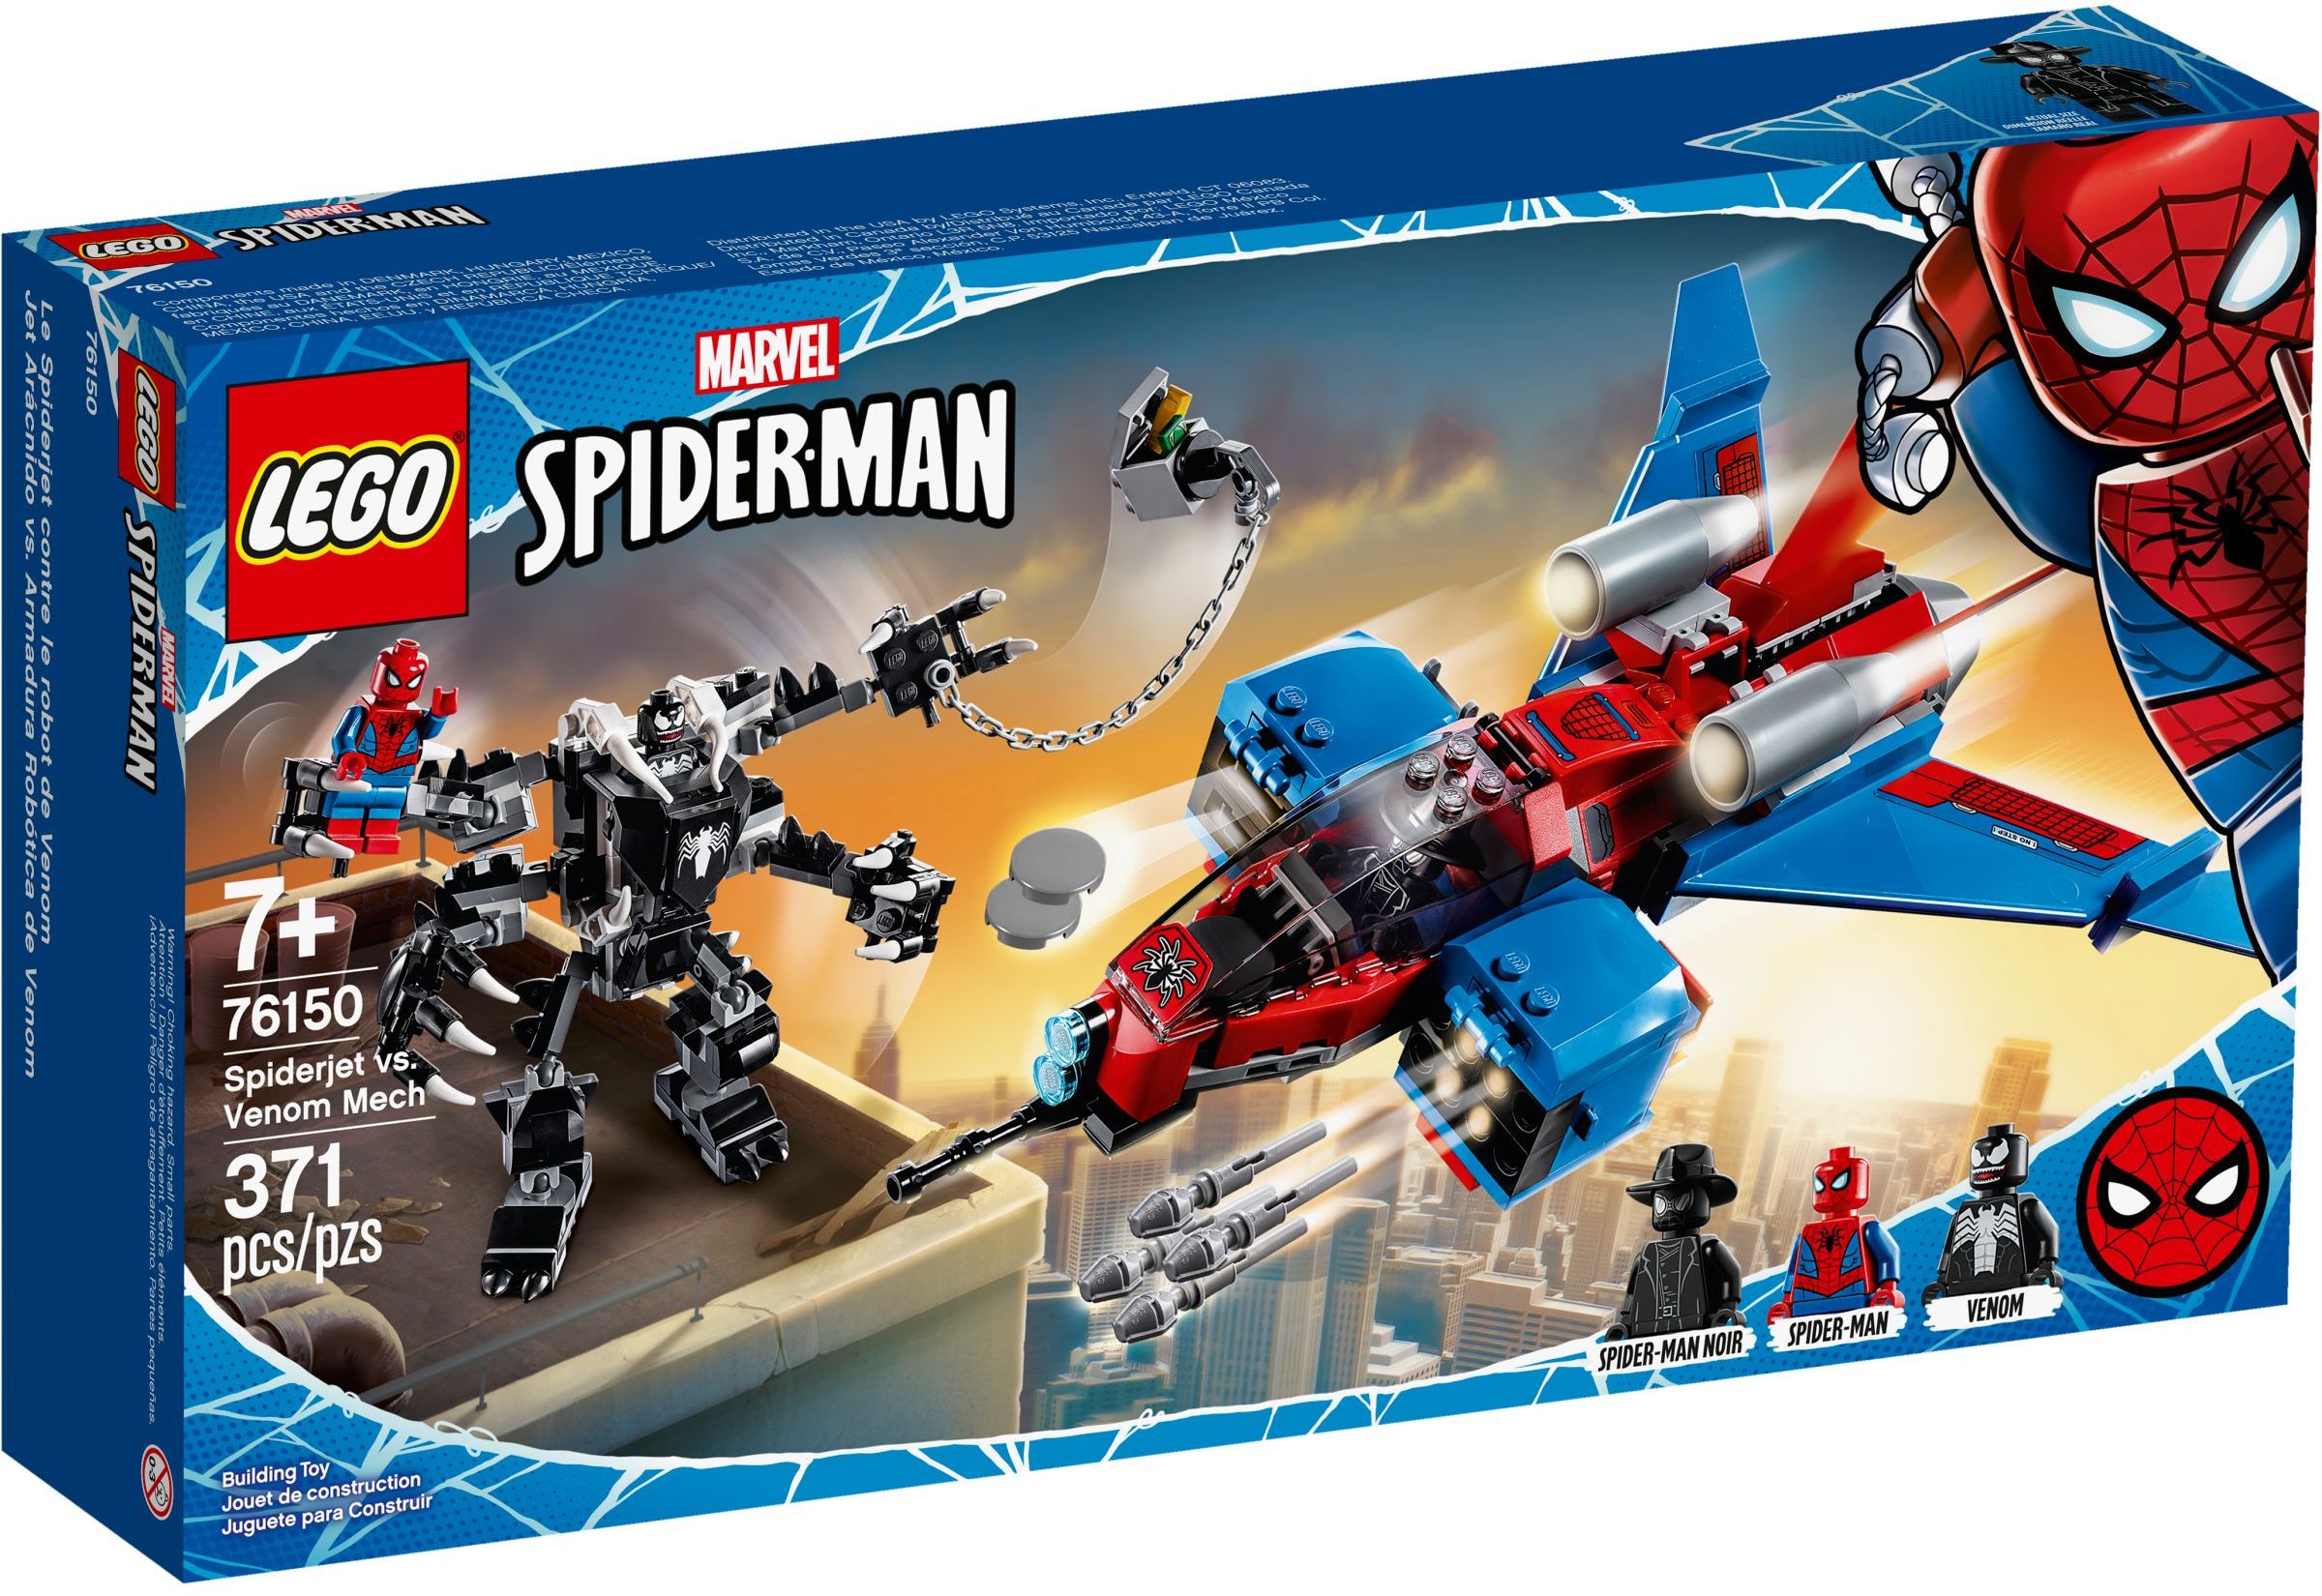 lego spider man 2018 sets